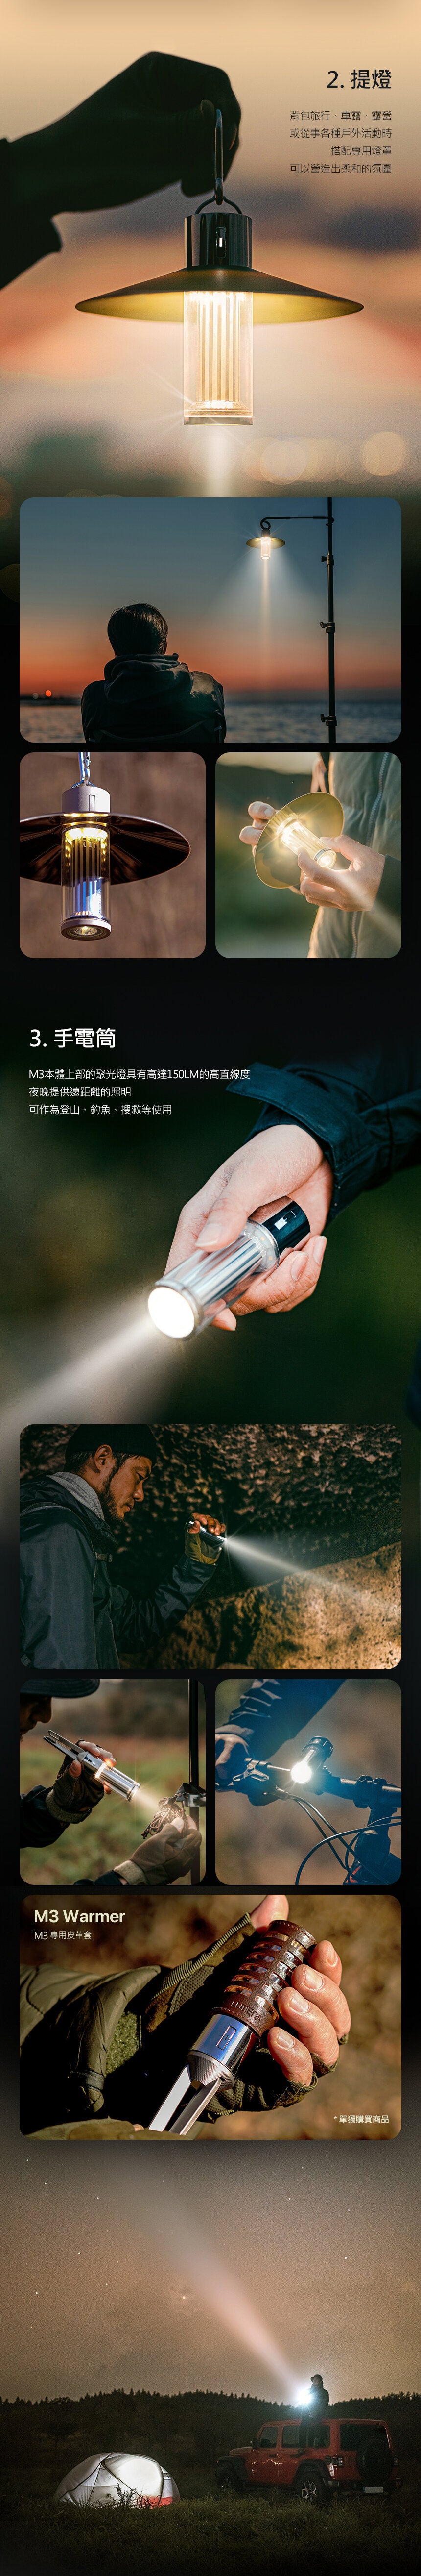 Lumena - M3 三合一多用途照明LED燈｜露營燈｜防水燈｜掛燈